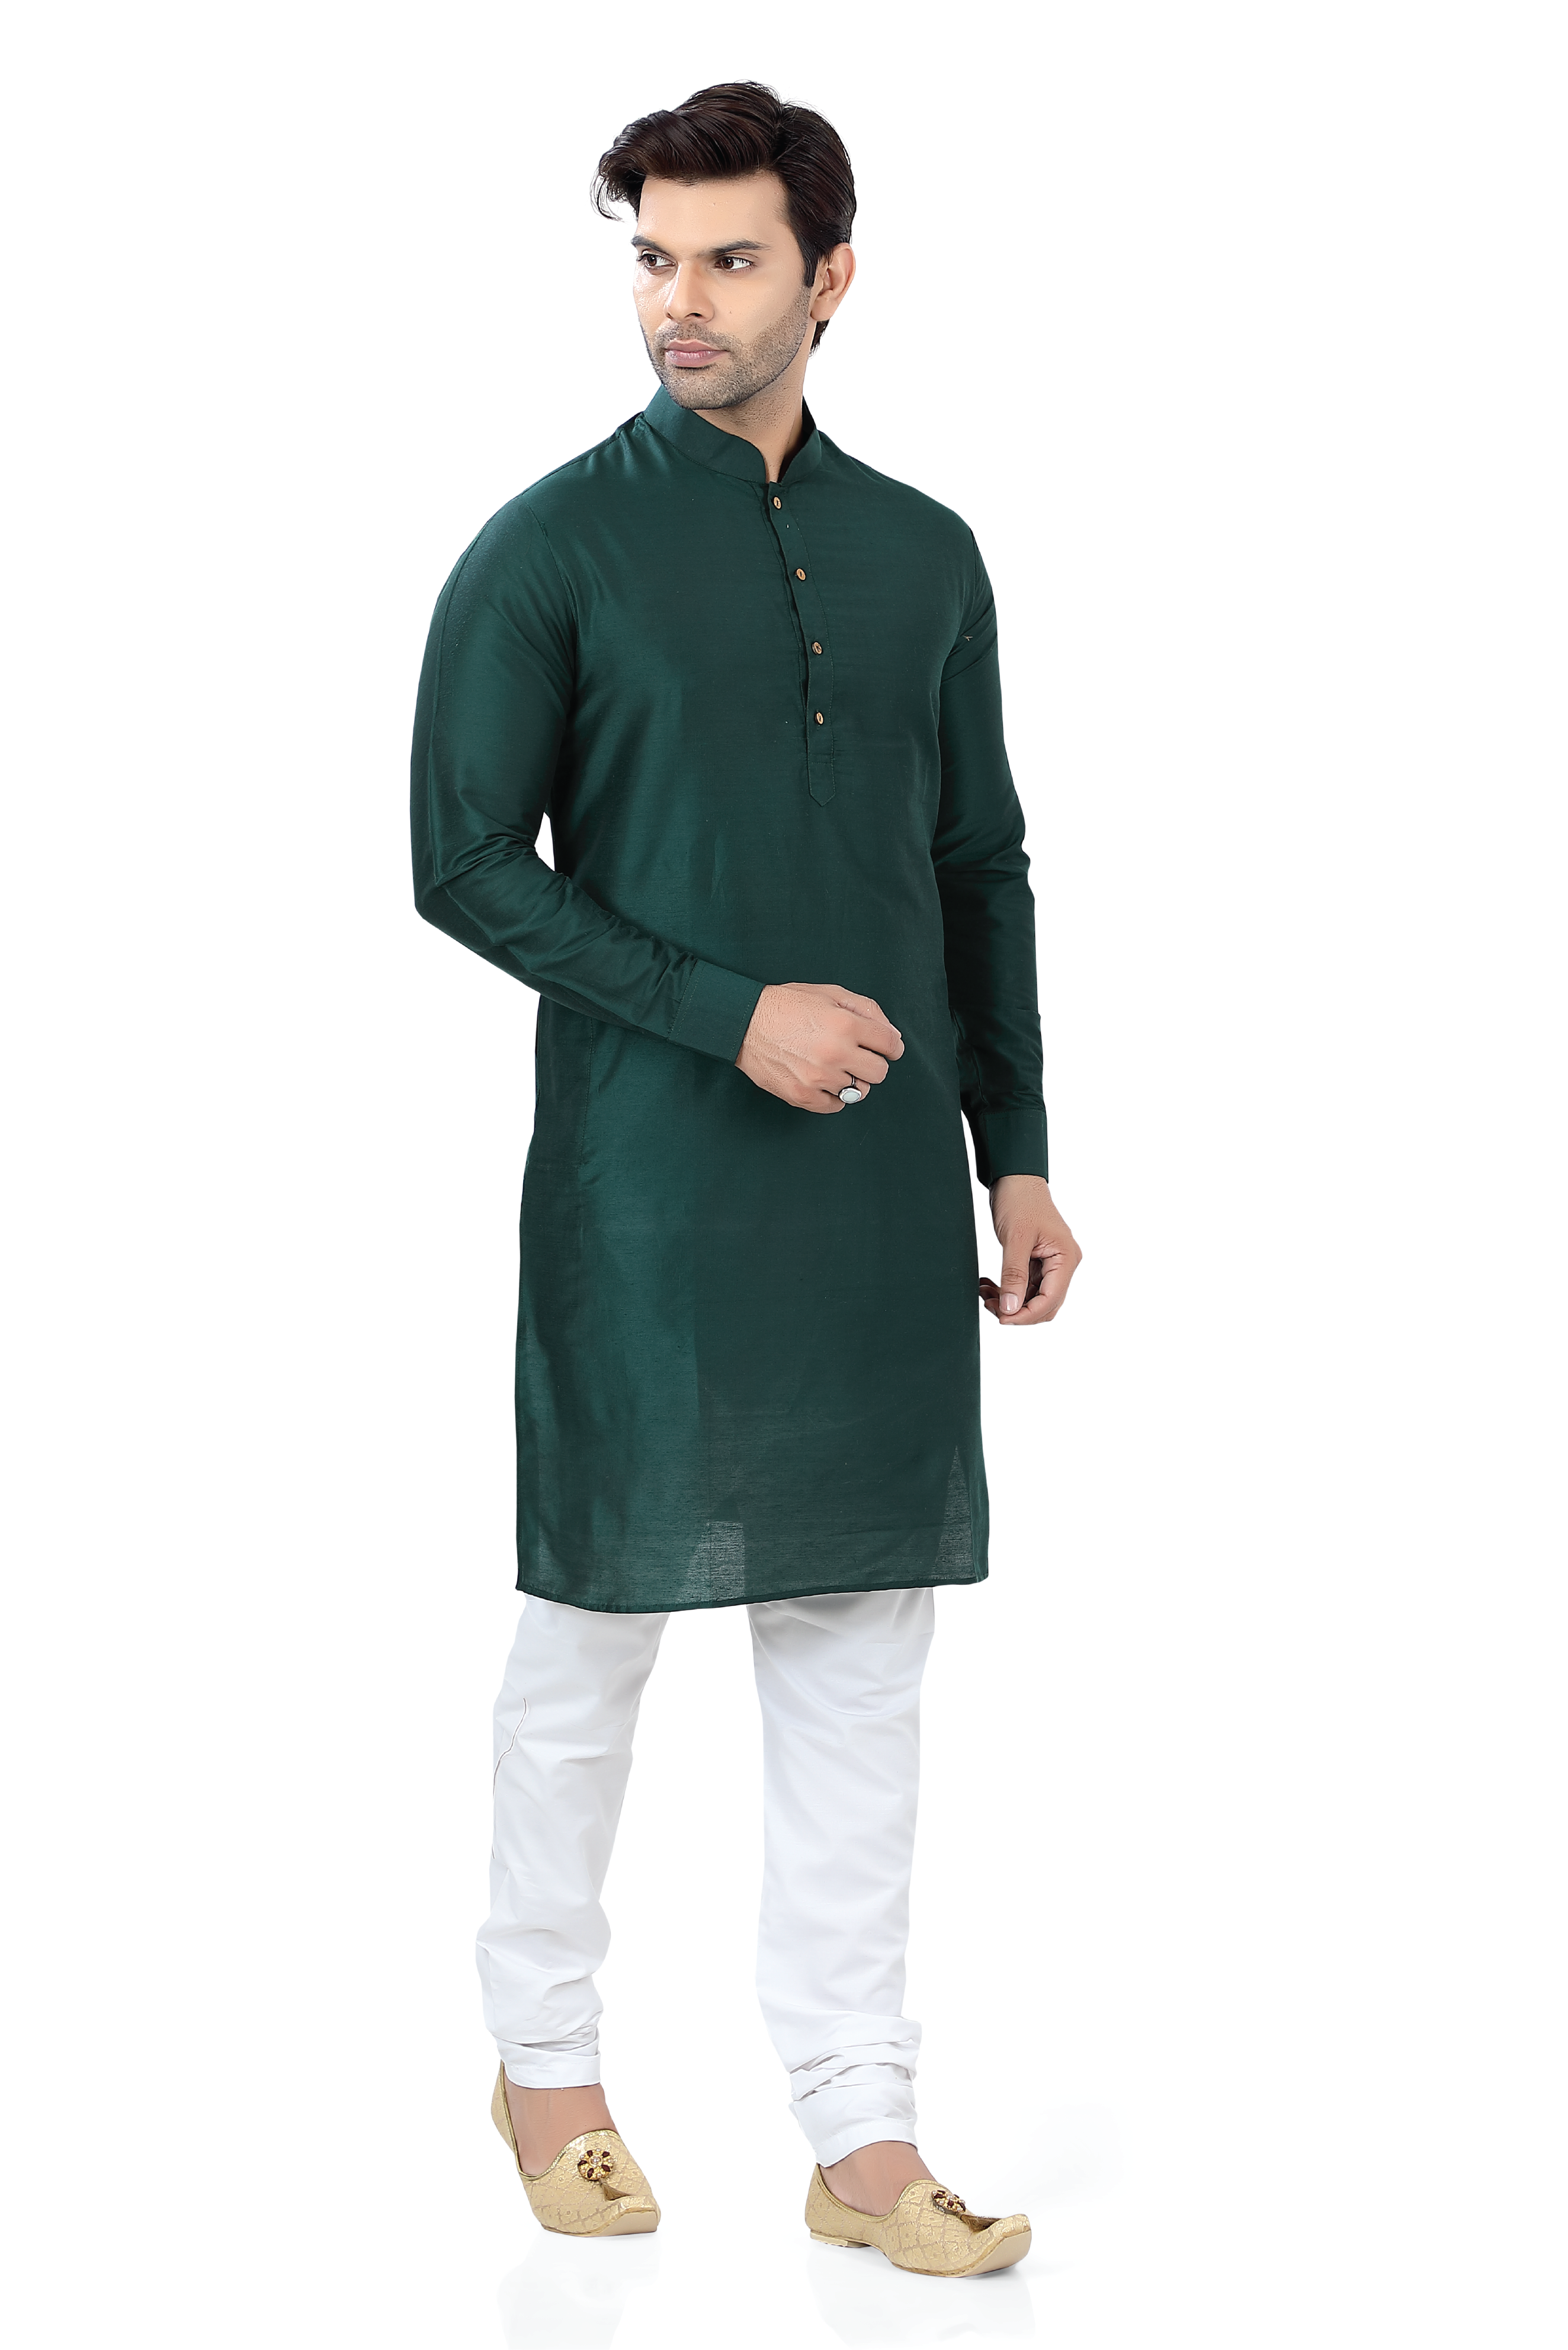 Soft Cotton Silk Kurta Pajama in Bottle Green Color - (MHPC101BG)